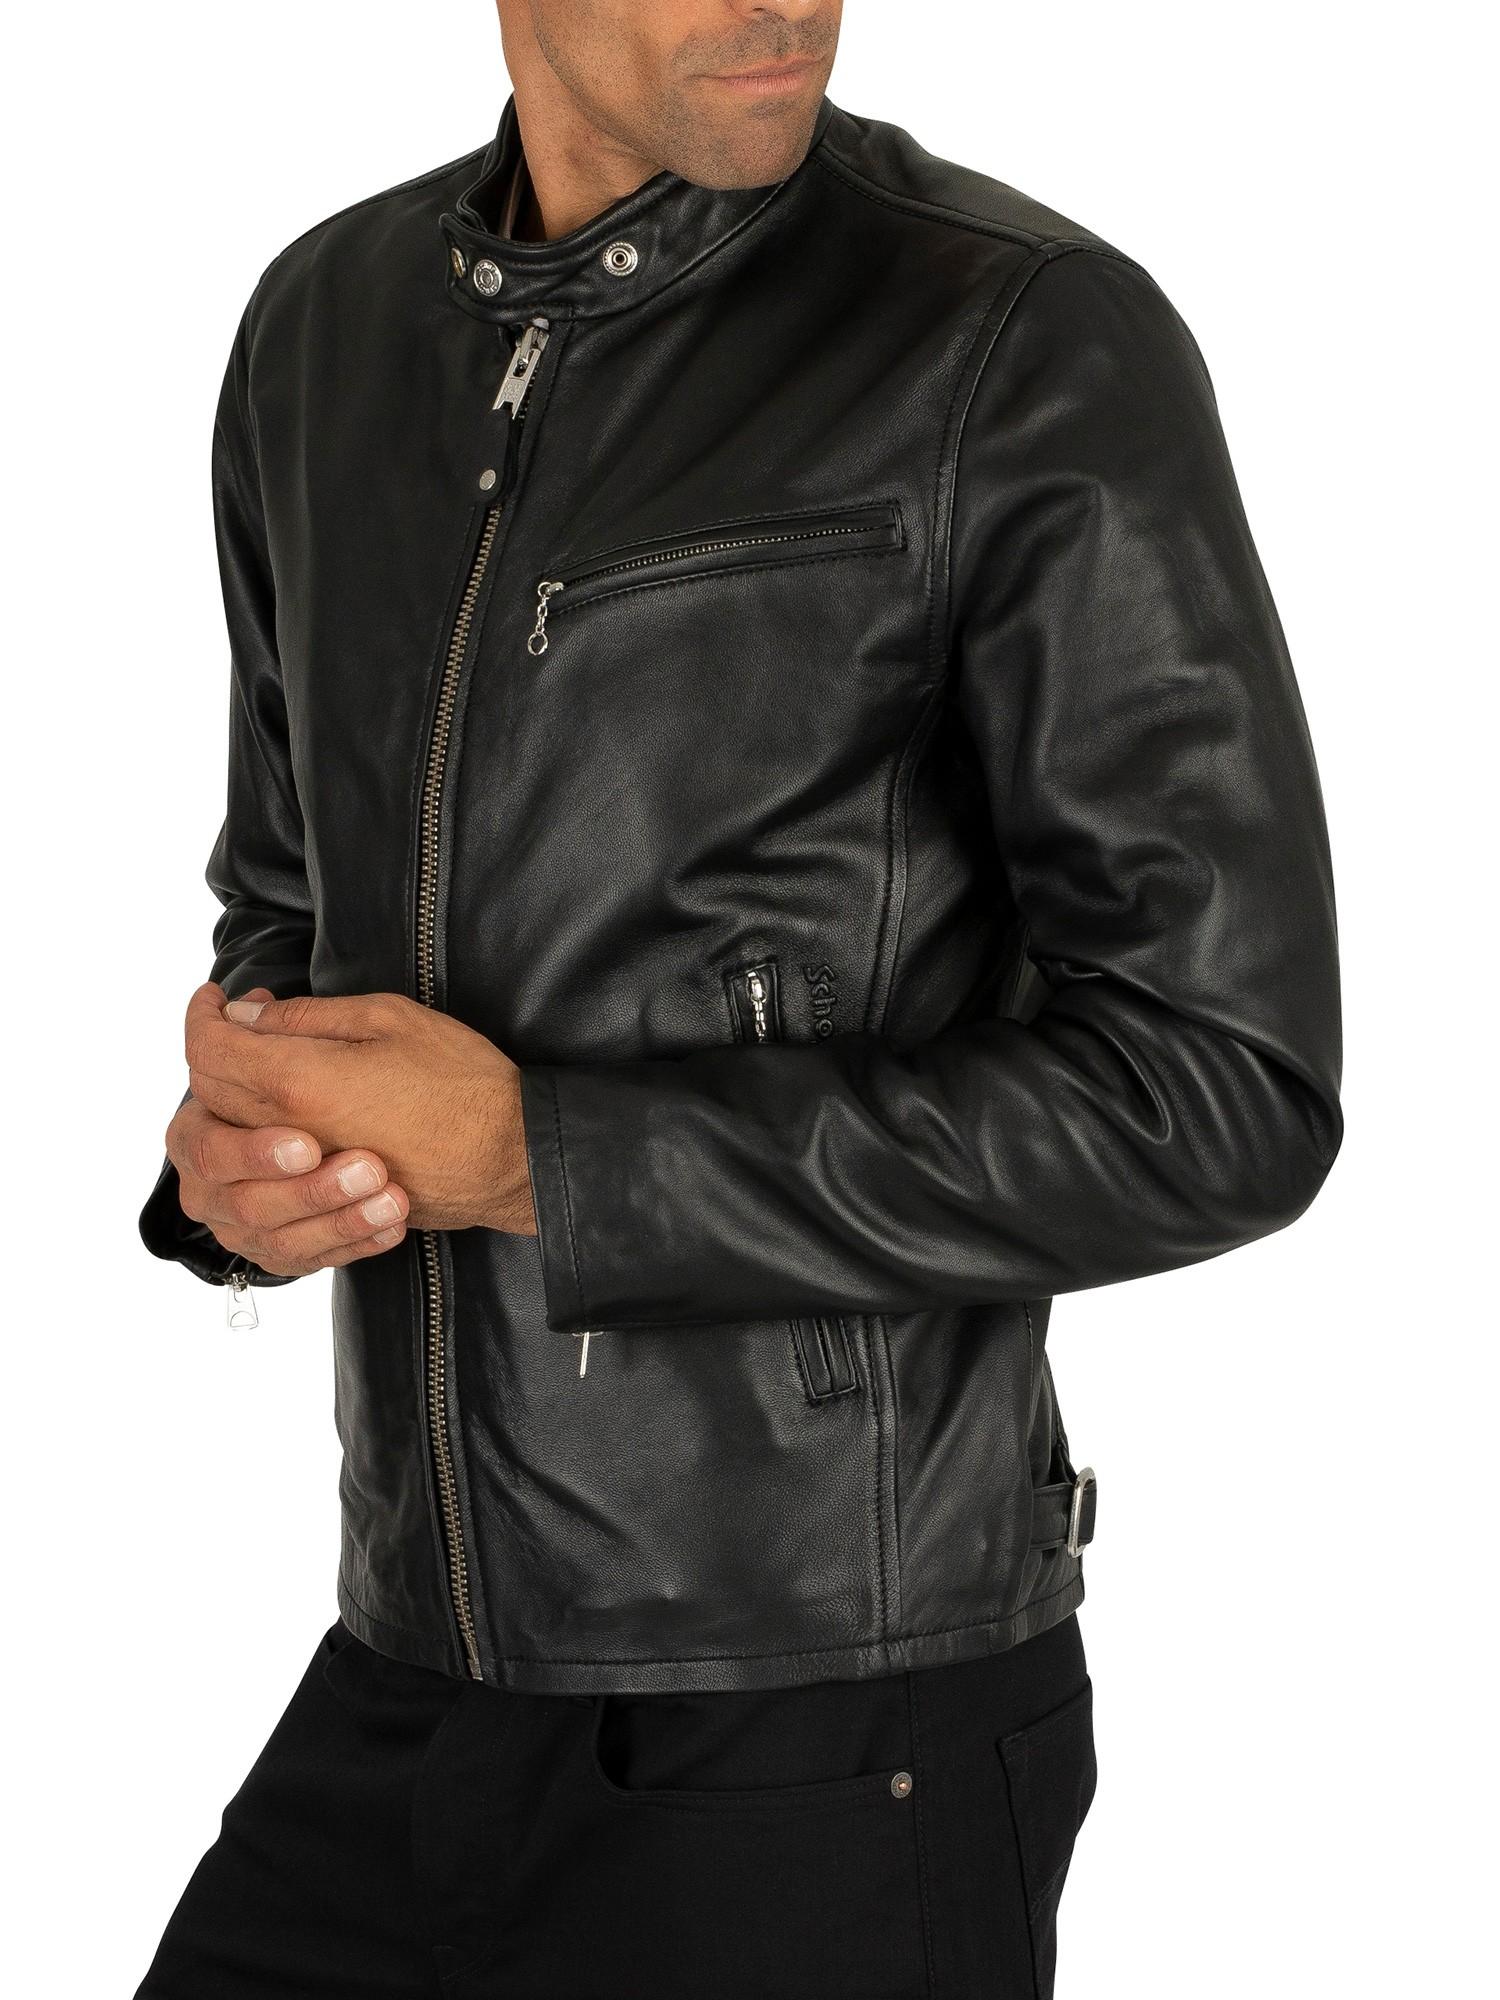 Schott Nyc Leather Jacket in Black for Men - Lyst